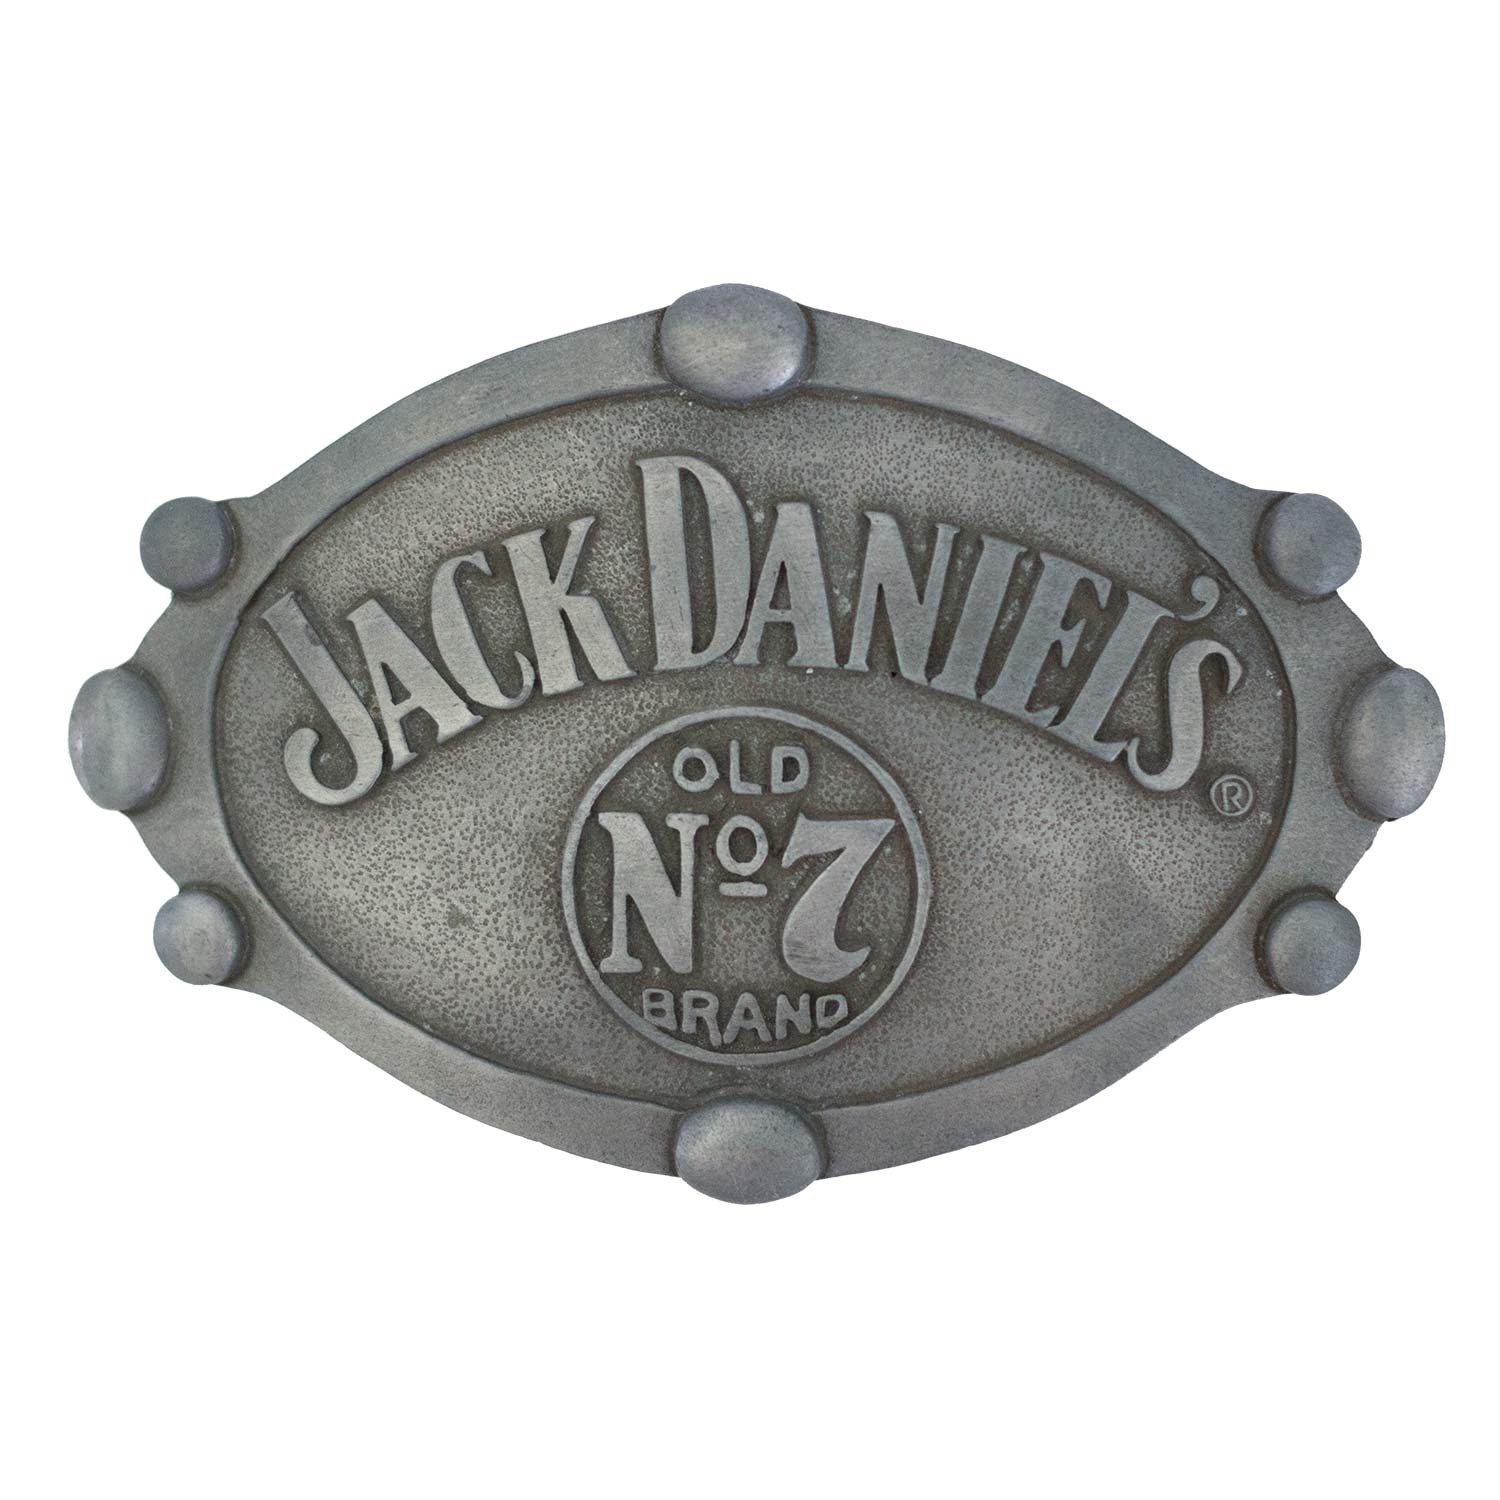 Jack Daniels Riveted Oval Belt Buckle